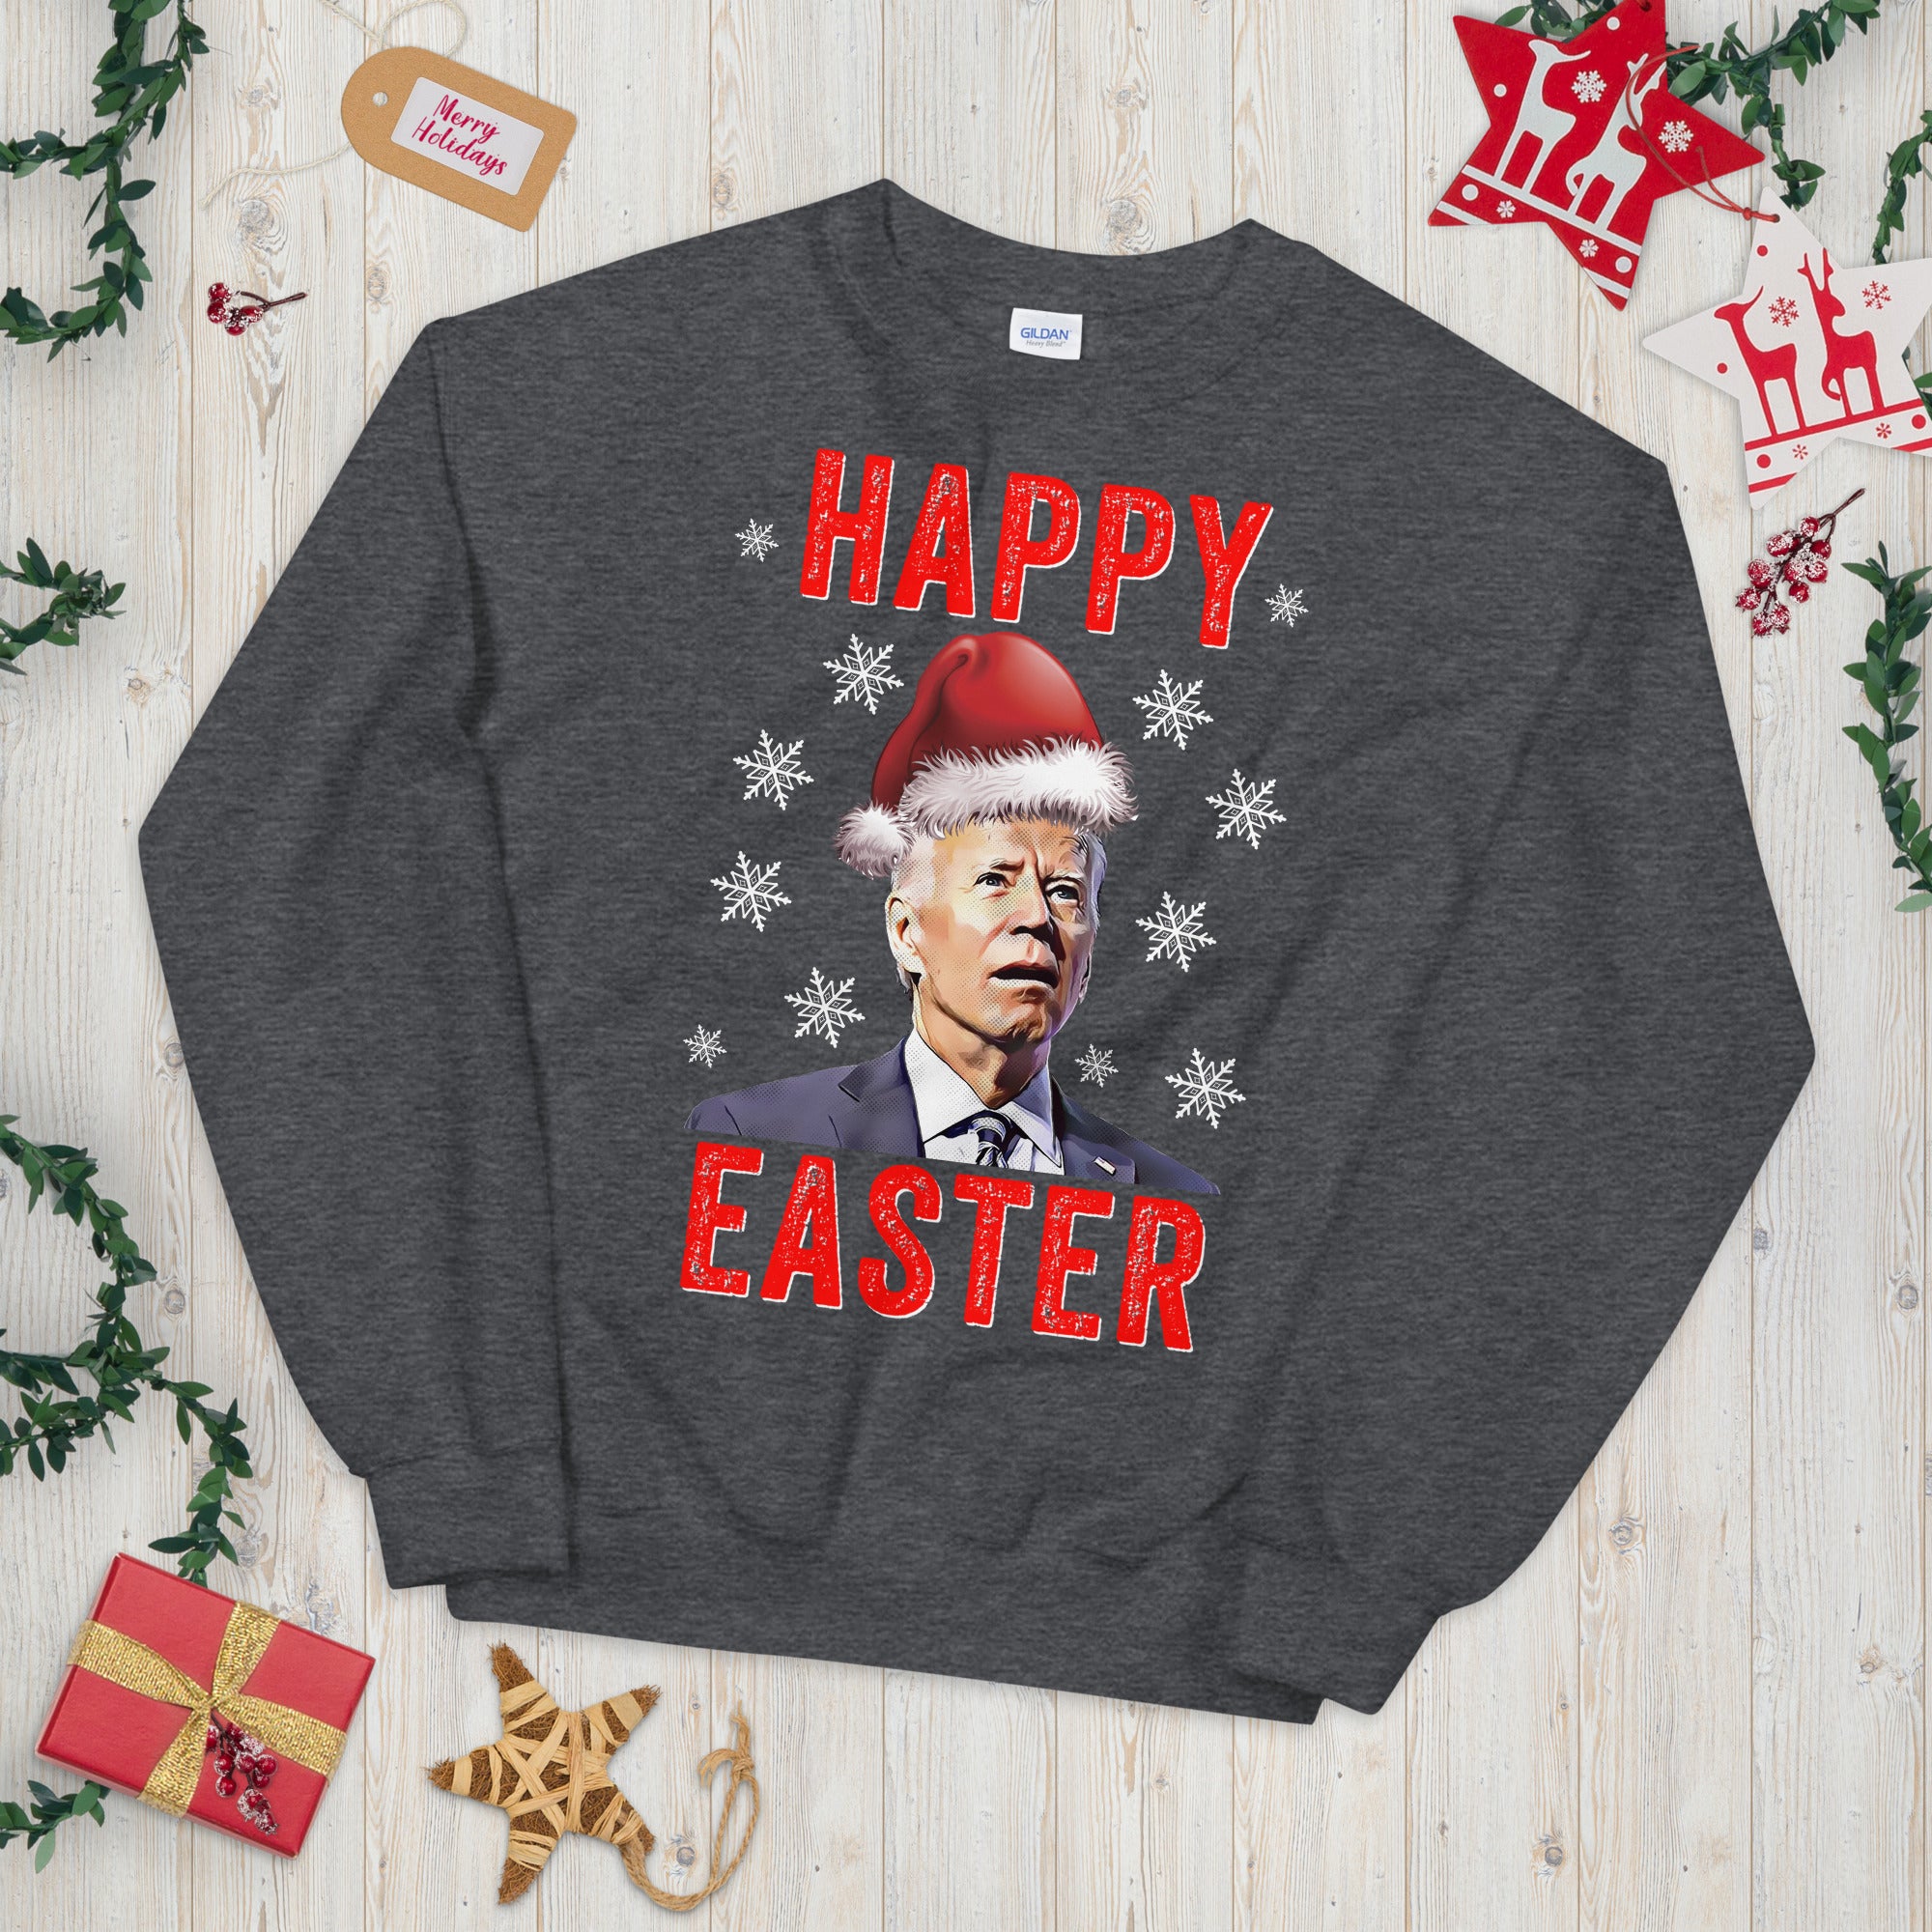 Ugly Christmas Sweater, Christmas Sweatshirt, Biden Xmas Sweater, FJB Sweater, Confused Happy Easter Christmas Sweater, Republican Xmas Gift - Madeinsea©